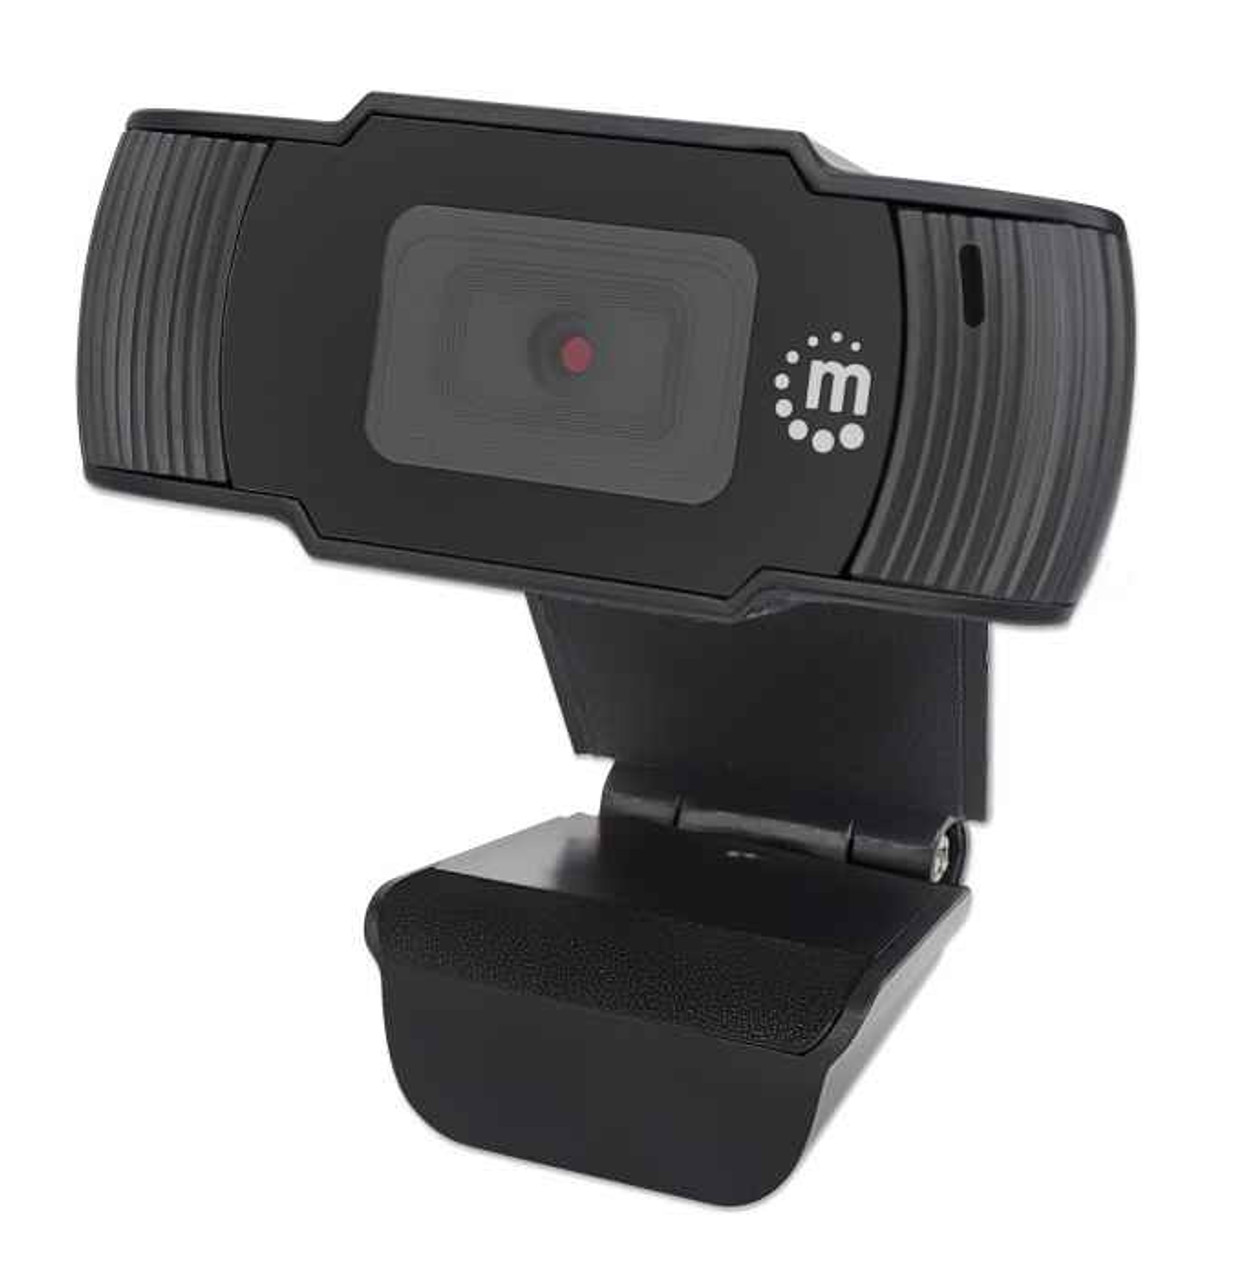 Webcam 1080p Full Hd Usb Web Camera With Microphone Usb Plug And